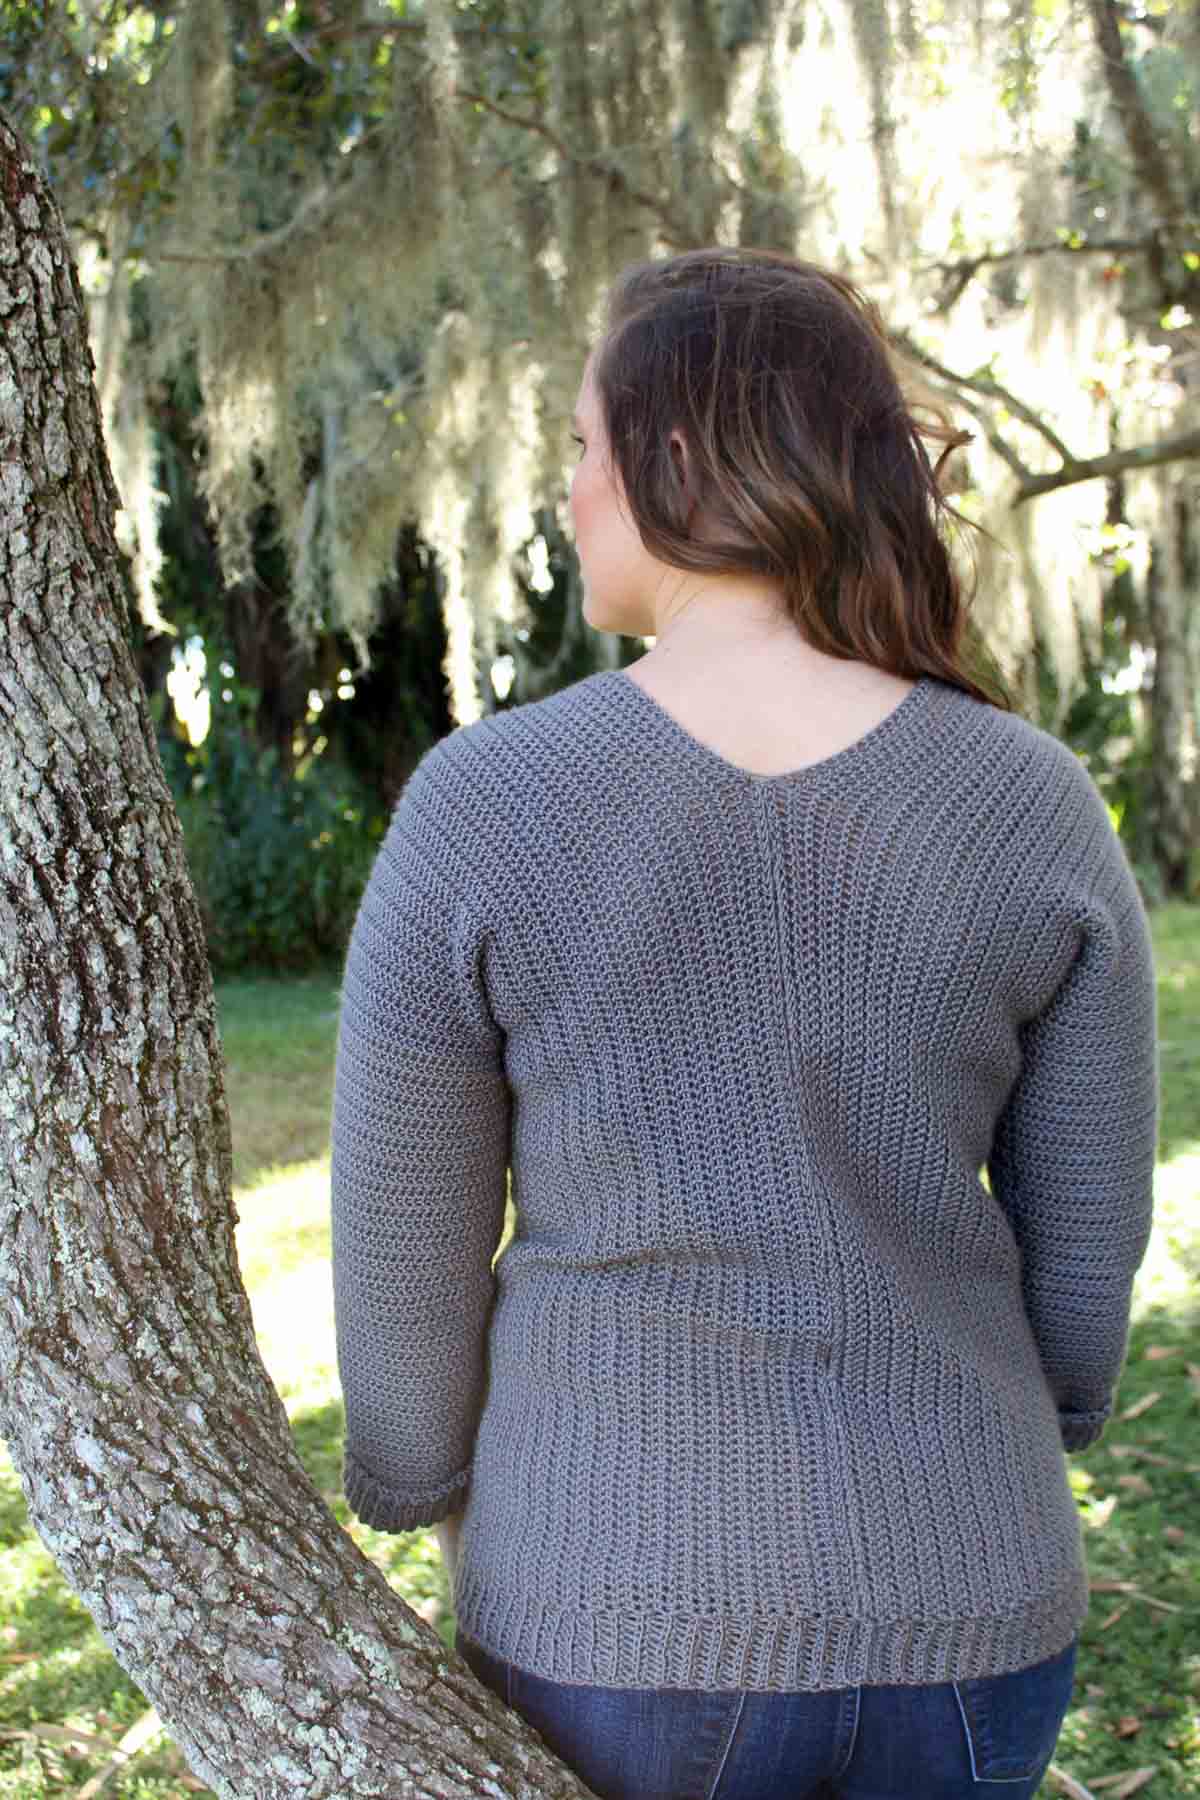 Classic V-neck crochet pullover pattern > easy construction! (free